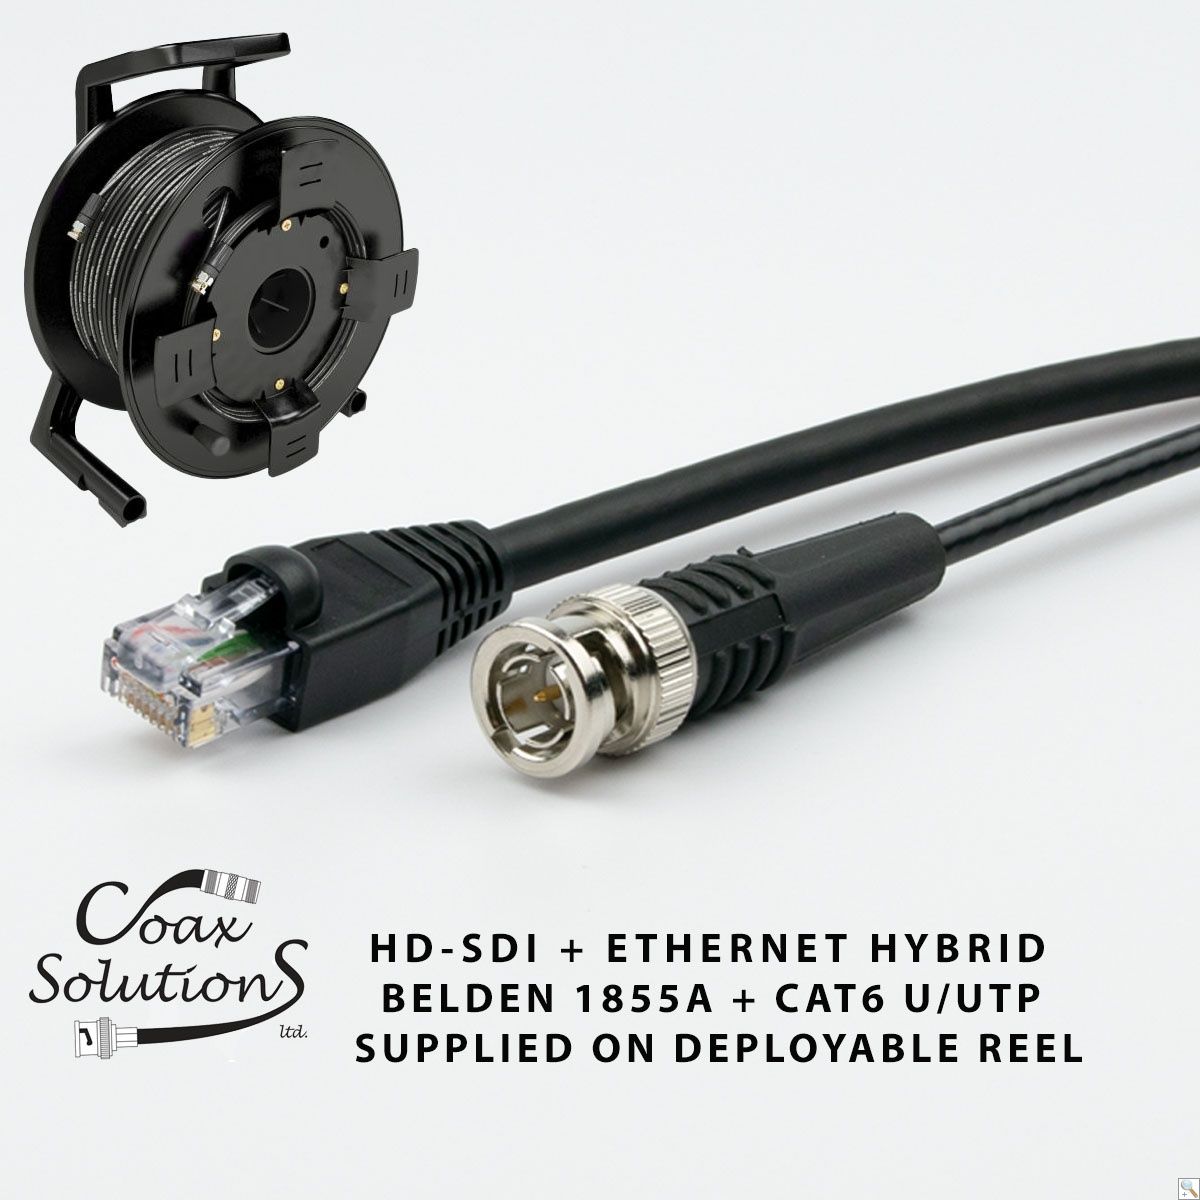 Belden 1855A + CAT6 Hybrid HD-SDI Patch Cable + Deployable Reel